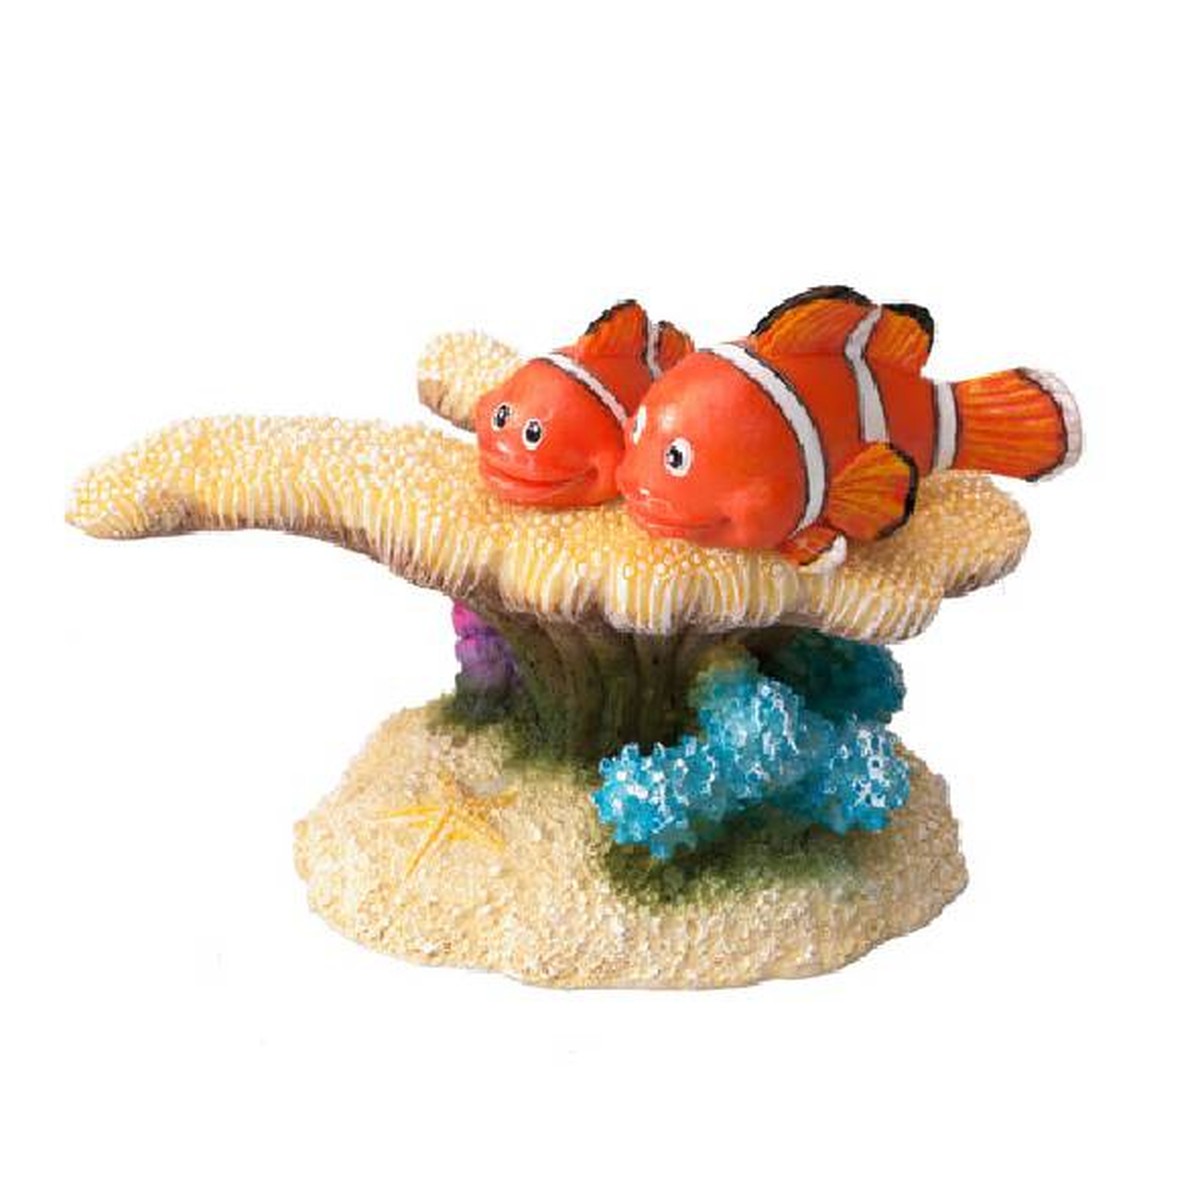   Décor Clown fish - 7 ca. 6x3.5x5 cm  6x3.5x5cm